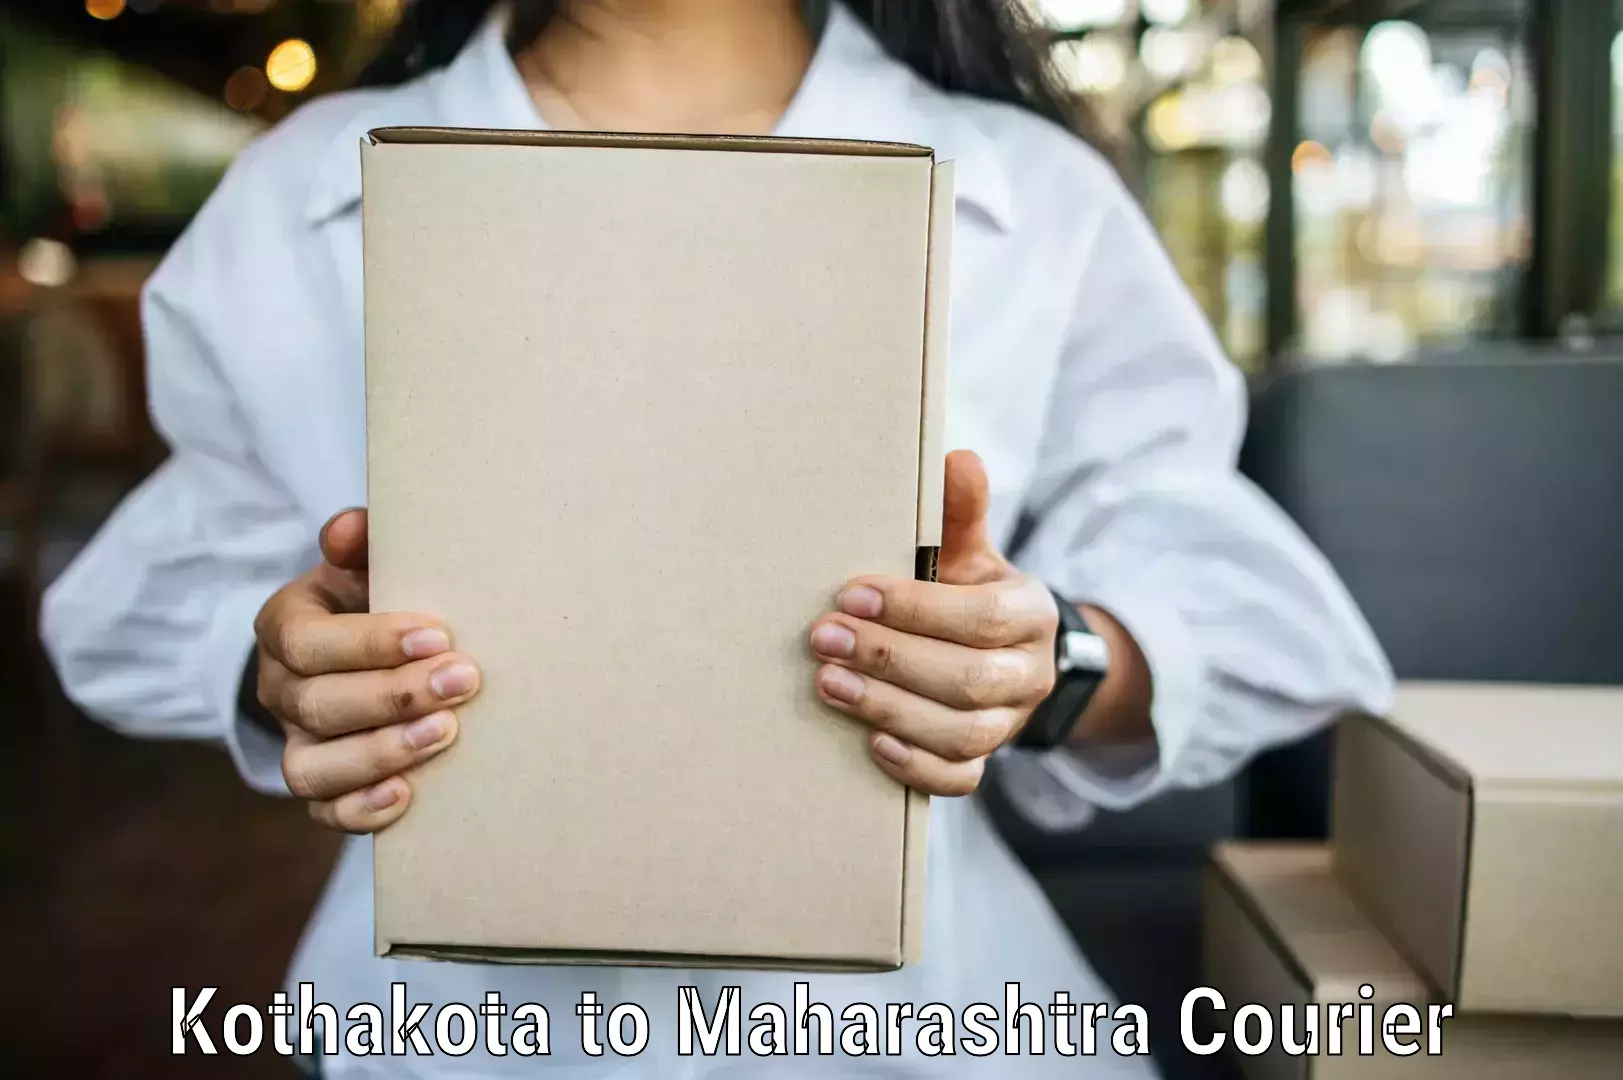 Courier service partnerships Kothakota to Ambarnath